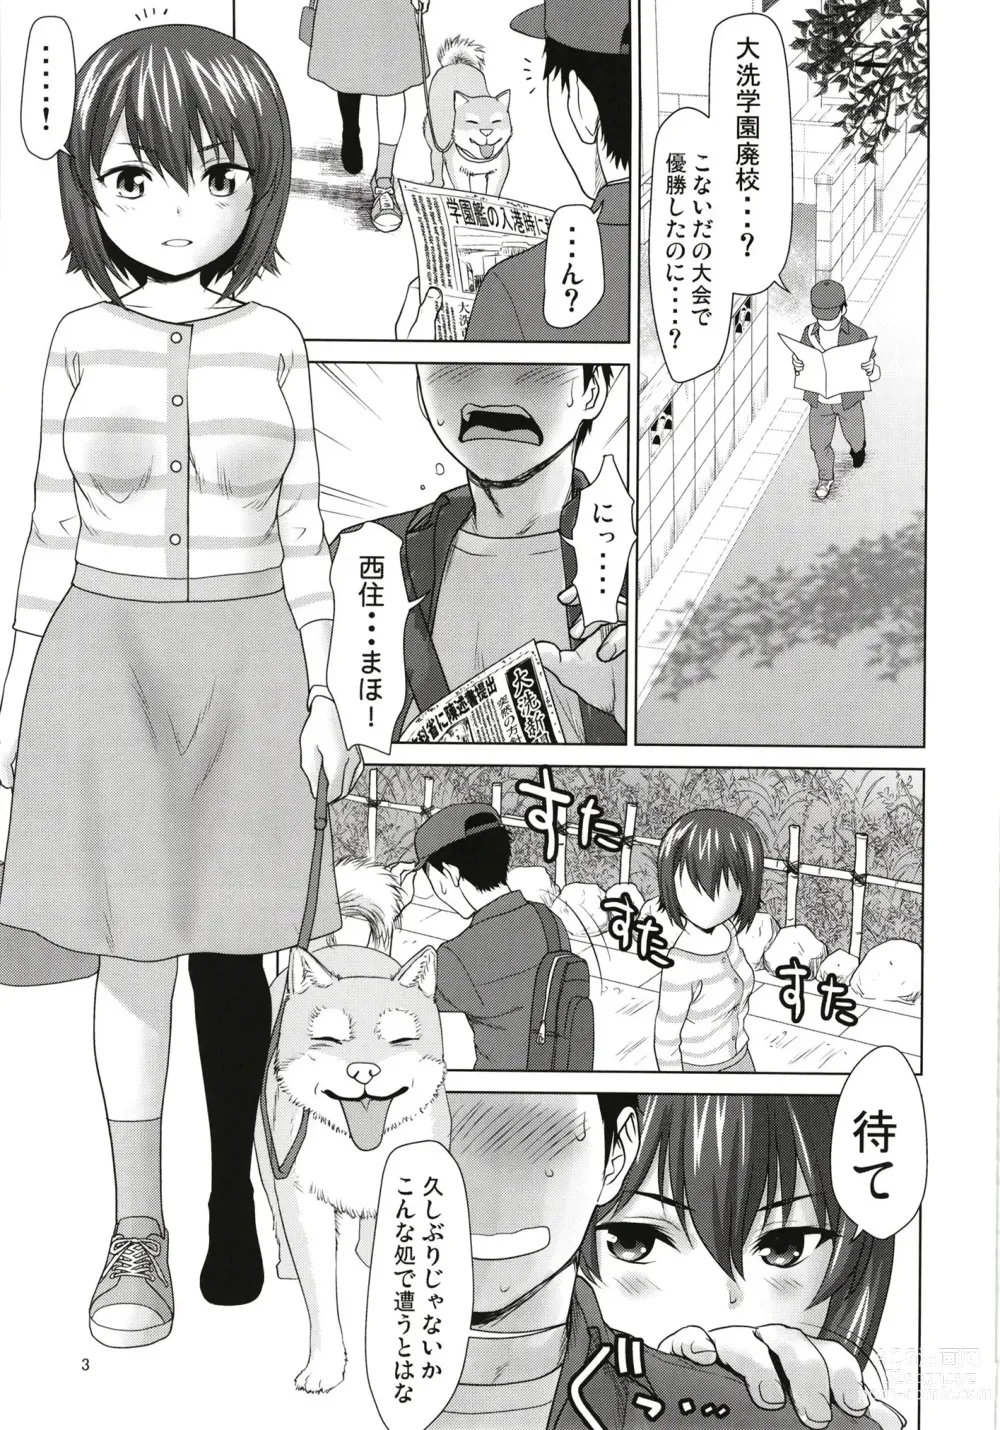 Page 3 of doujinshi Nishizumi-ke no Hime Asobi